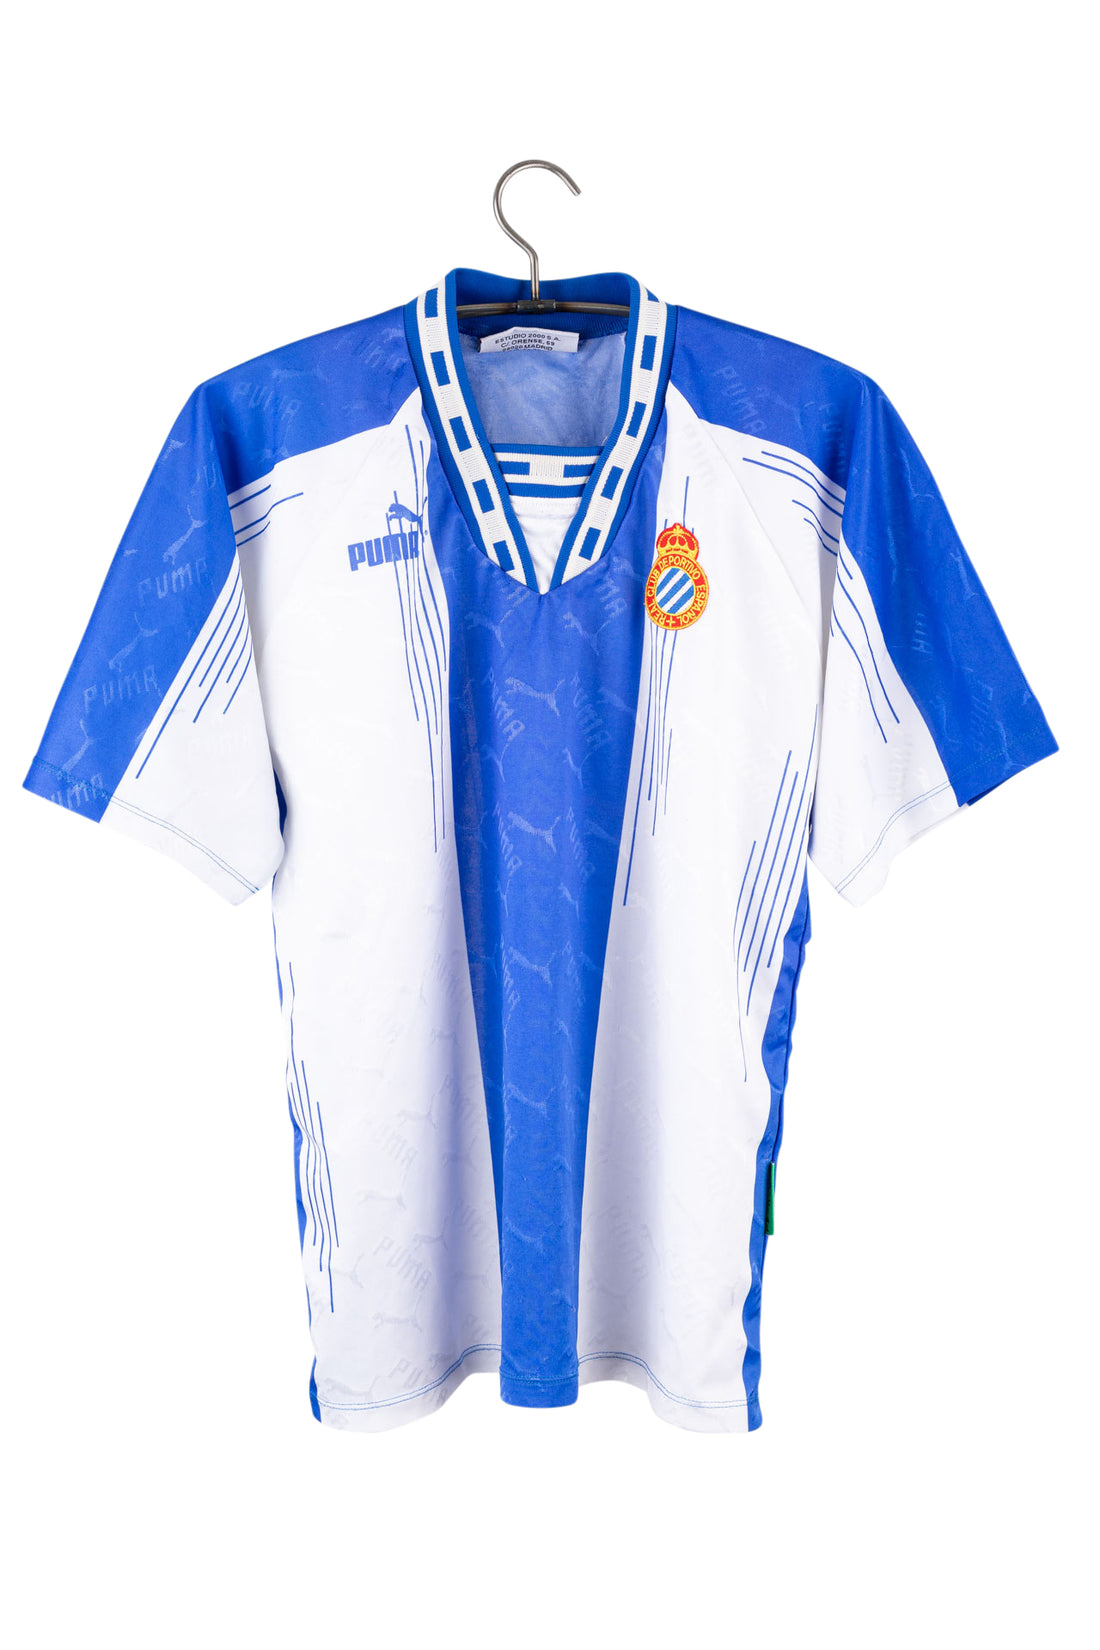 Espanyol 1994 - 1995 Home Football Shirt